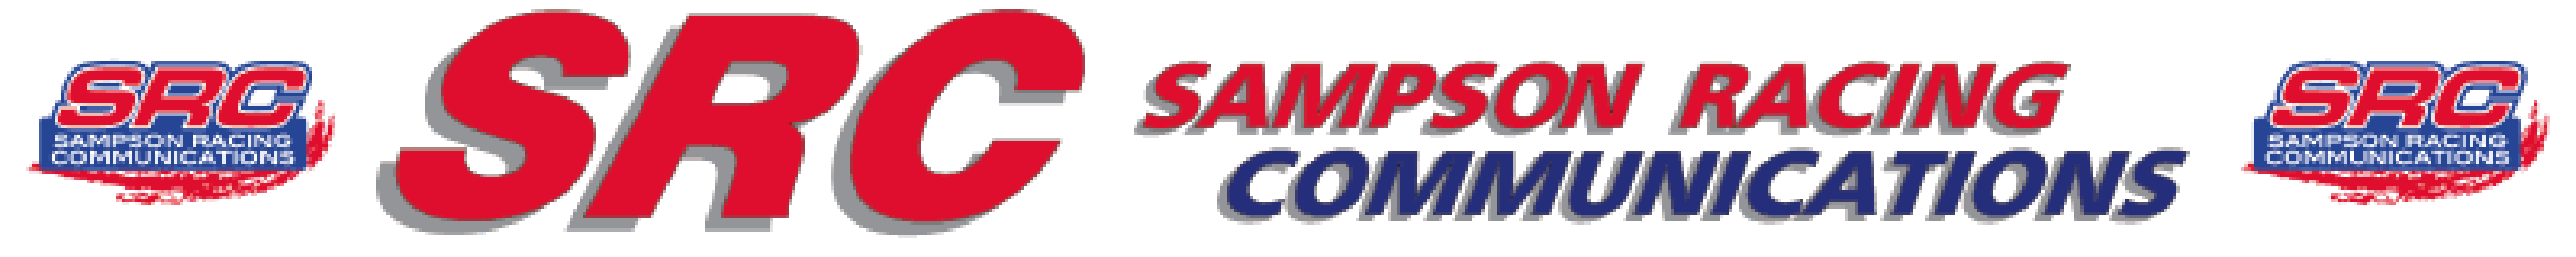 Samson Racing Communications